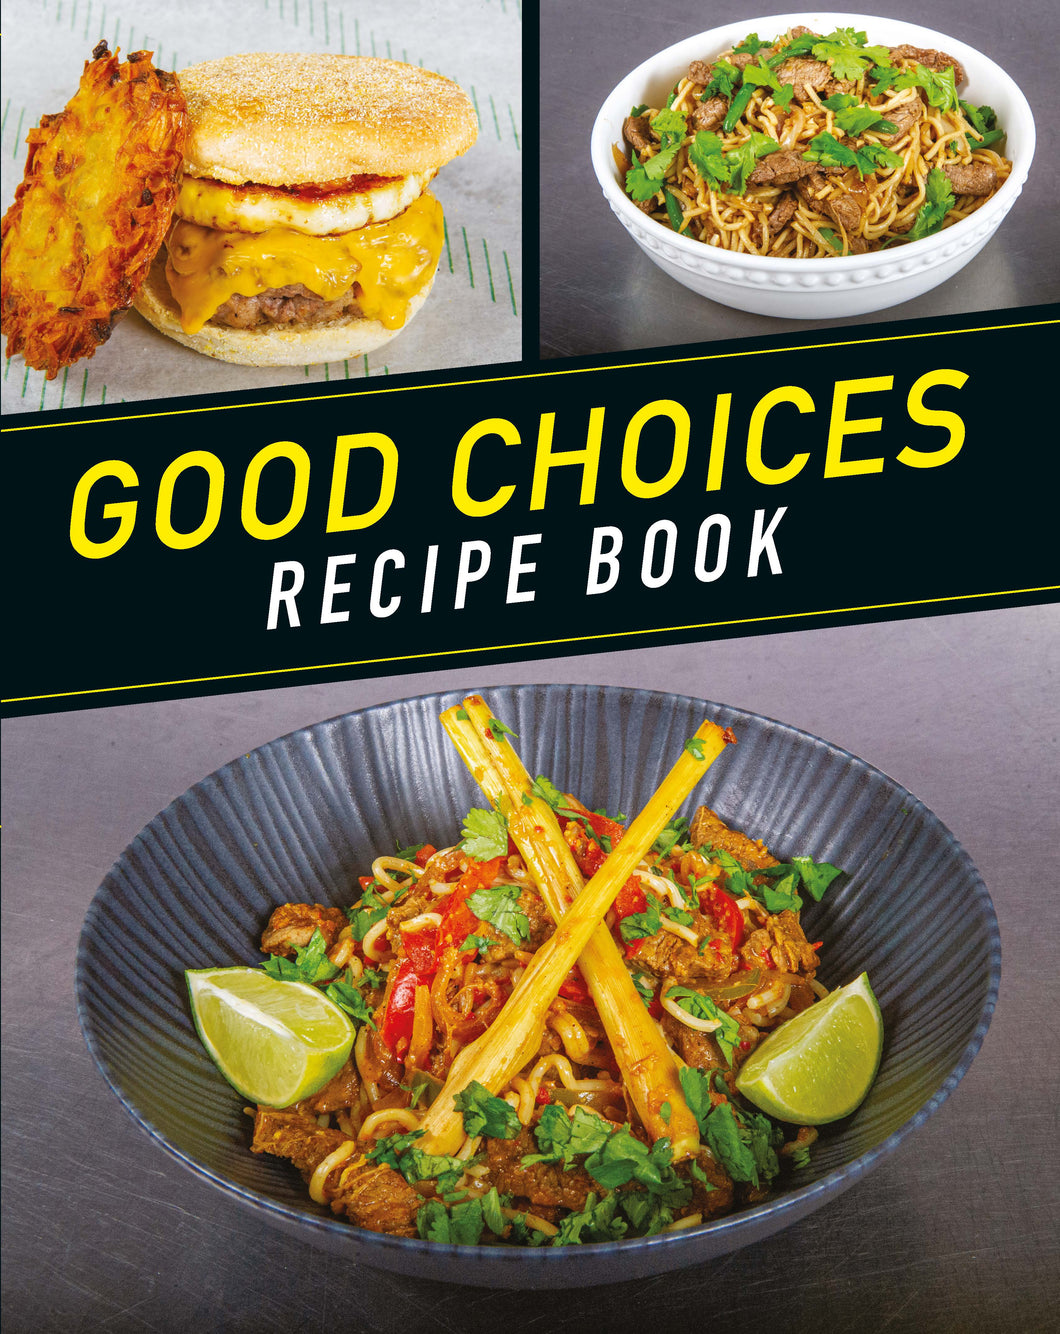 Good Choices Recipe Book - Dan Good